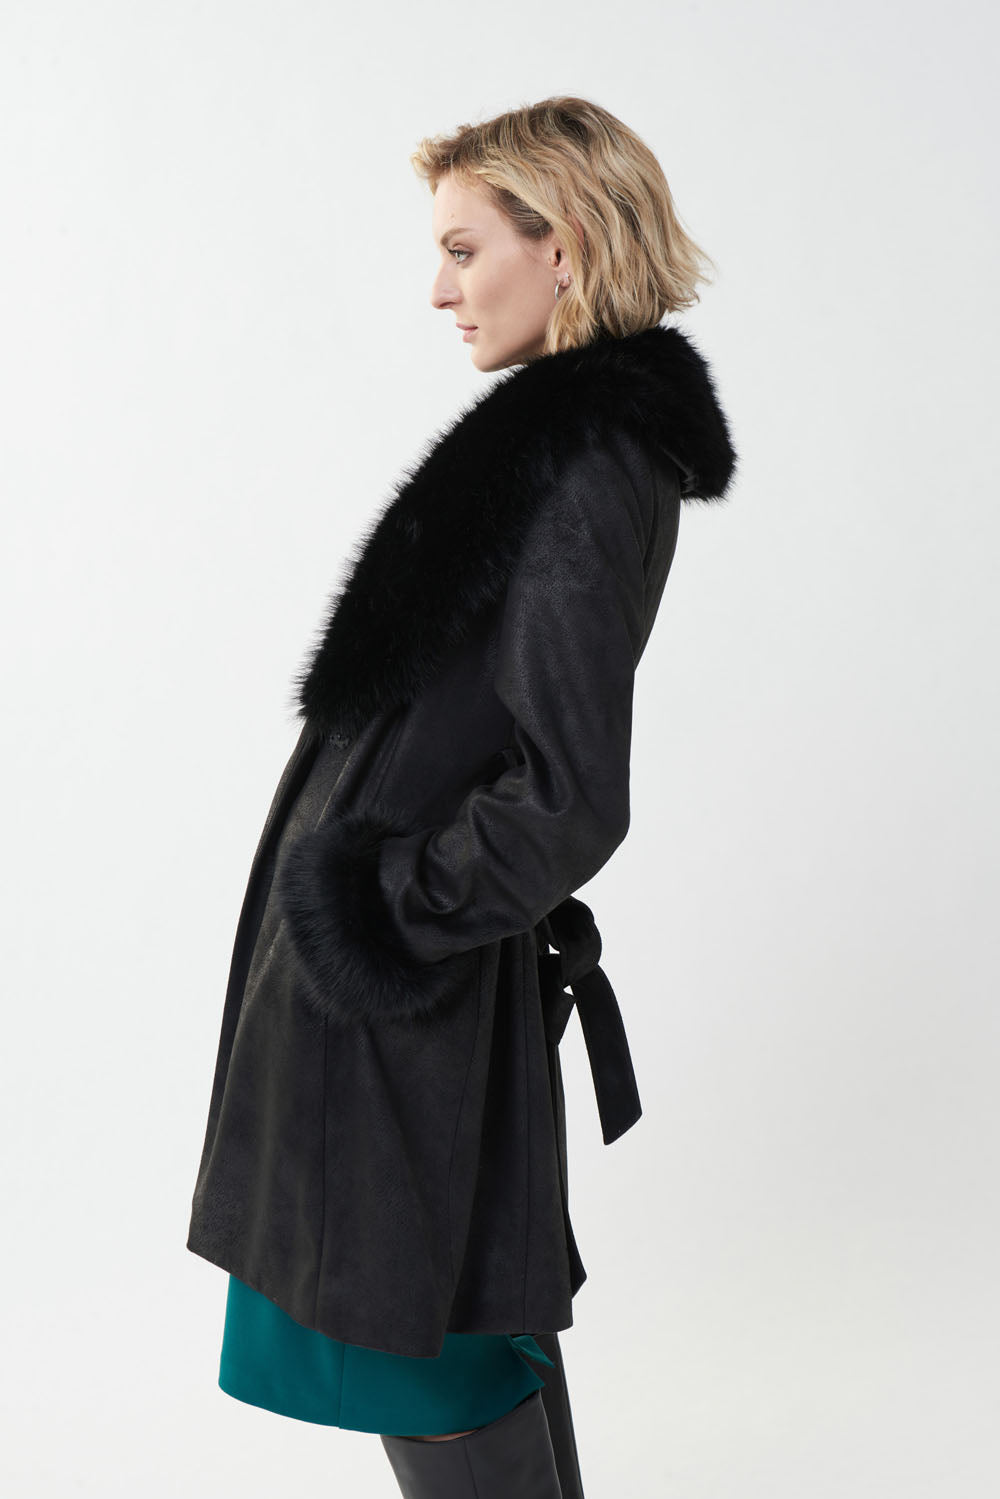 Joseph Ribkoff Black Faux Coat Style 223918